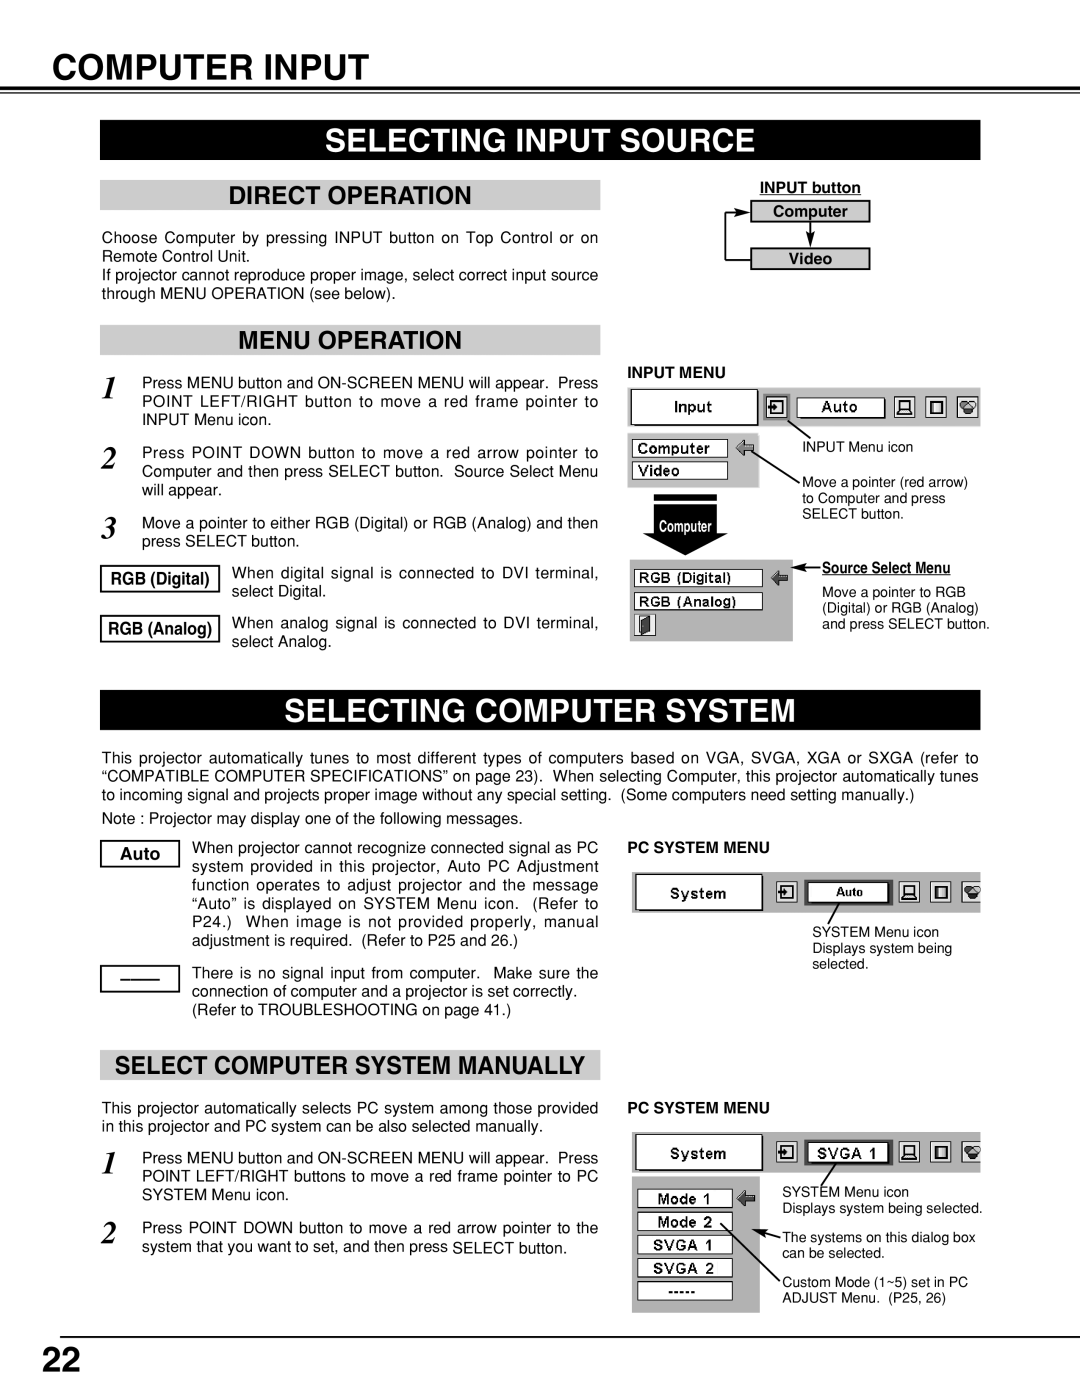 BOXLIGHT CP-18t manual Computer Input, Selecting Input Source, Selecting Computer System, Select Computer System Manually 